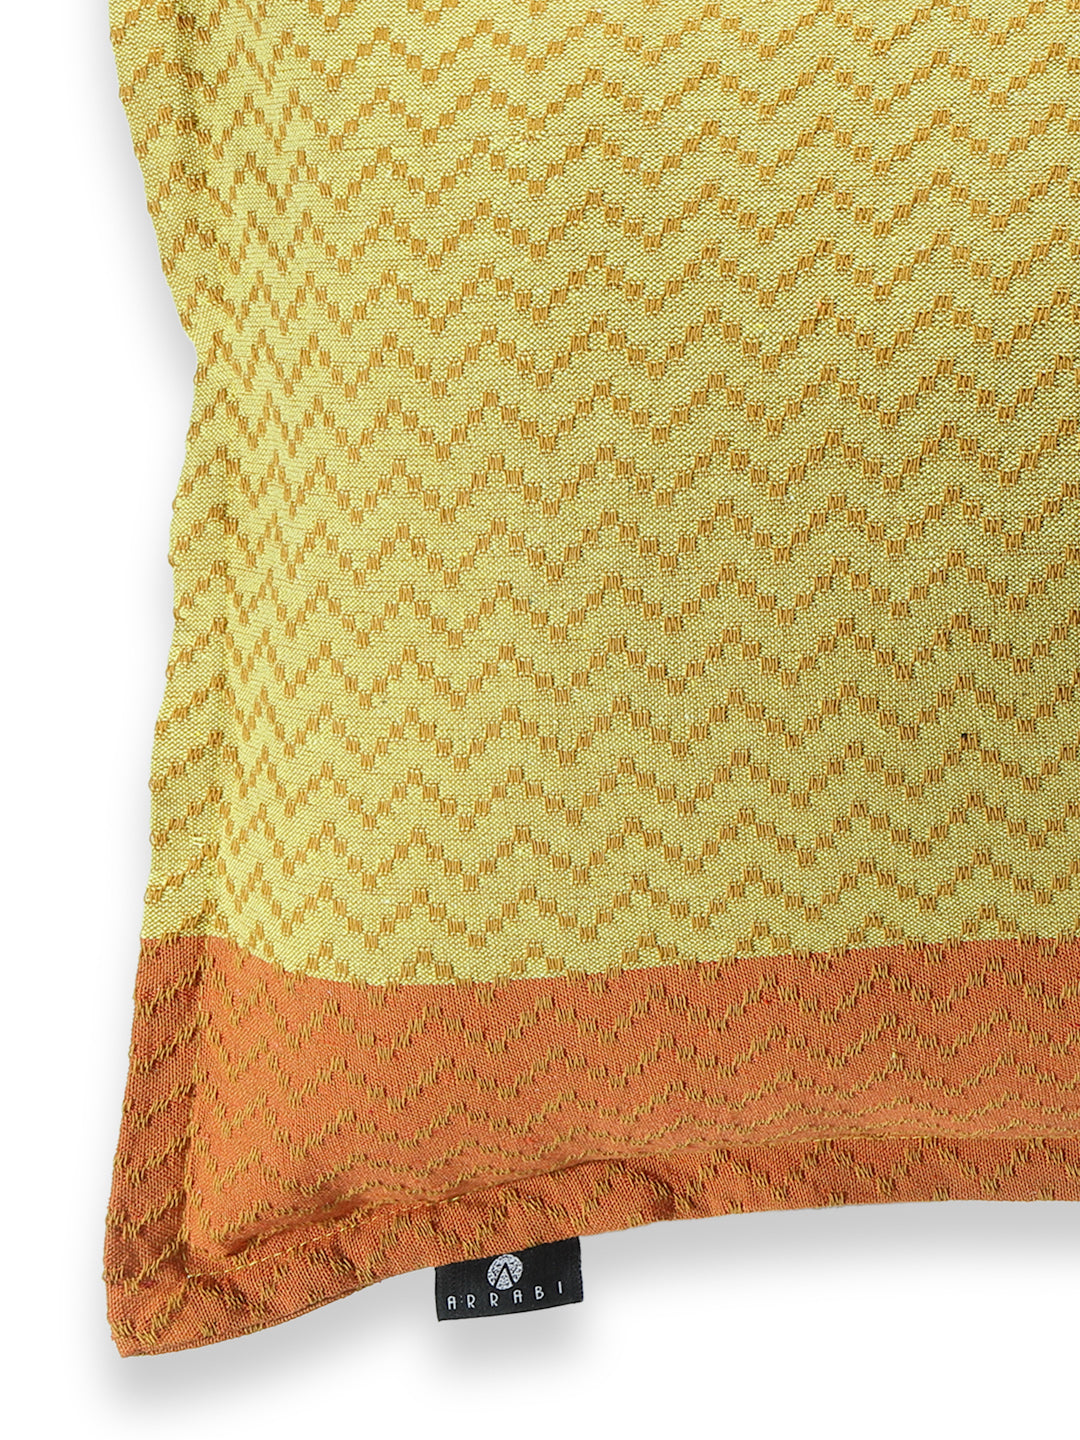 Arrabi Orange Geometric Handwoven Cotton Set of 2 Pillow Covers (70 x 45 cm)